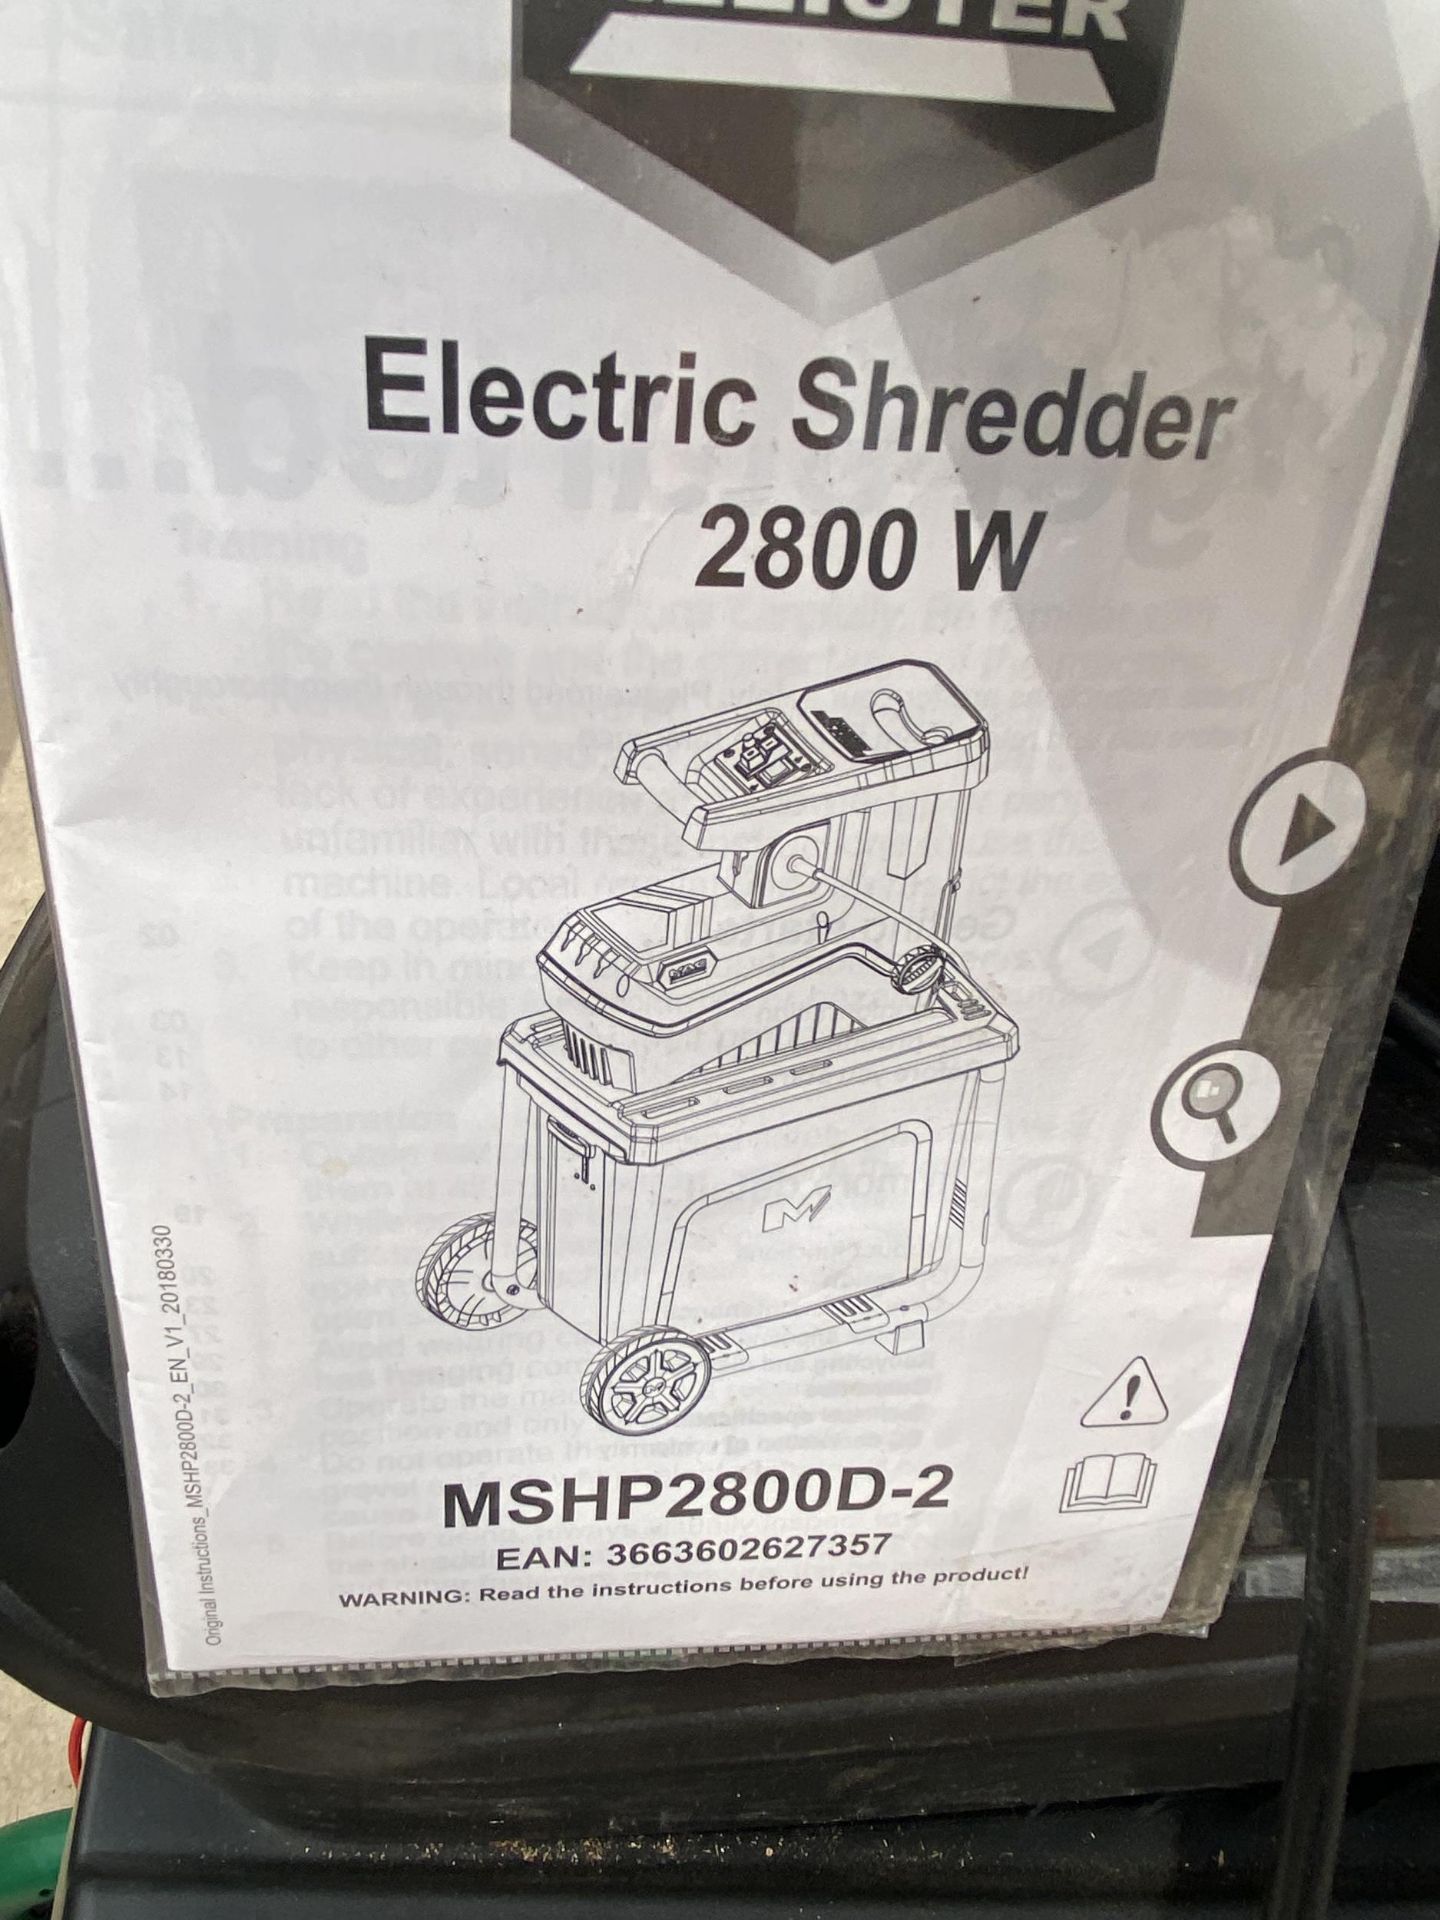 A MACALLISTER MSHP2800D-2 ELECTRIC GARDEN SHREDDER - Image 5 of 6